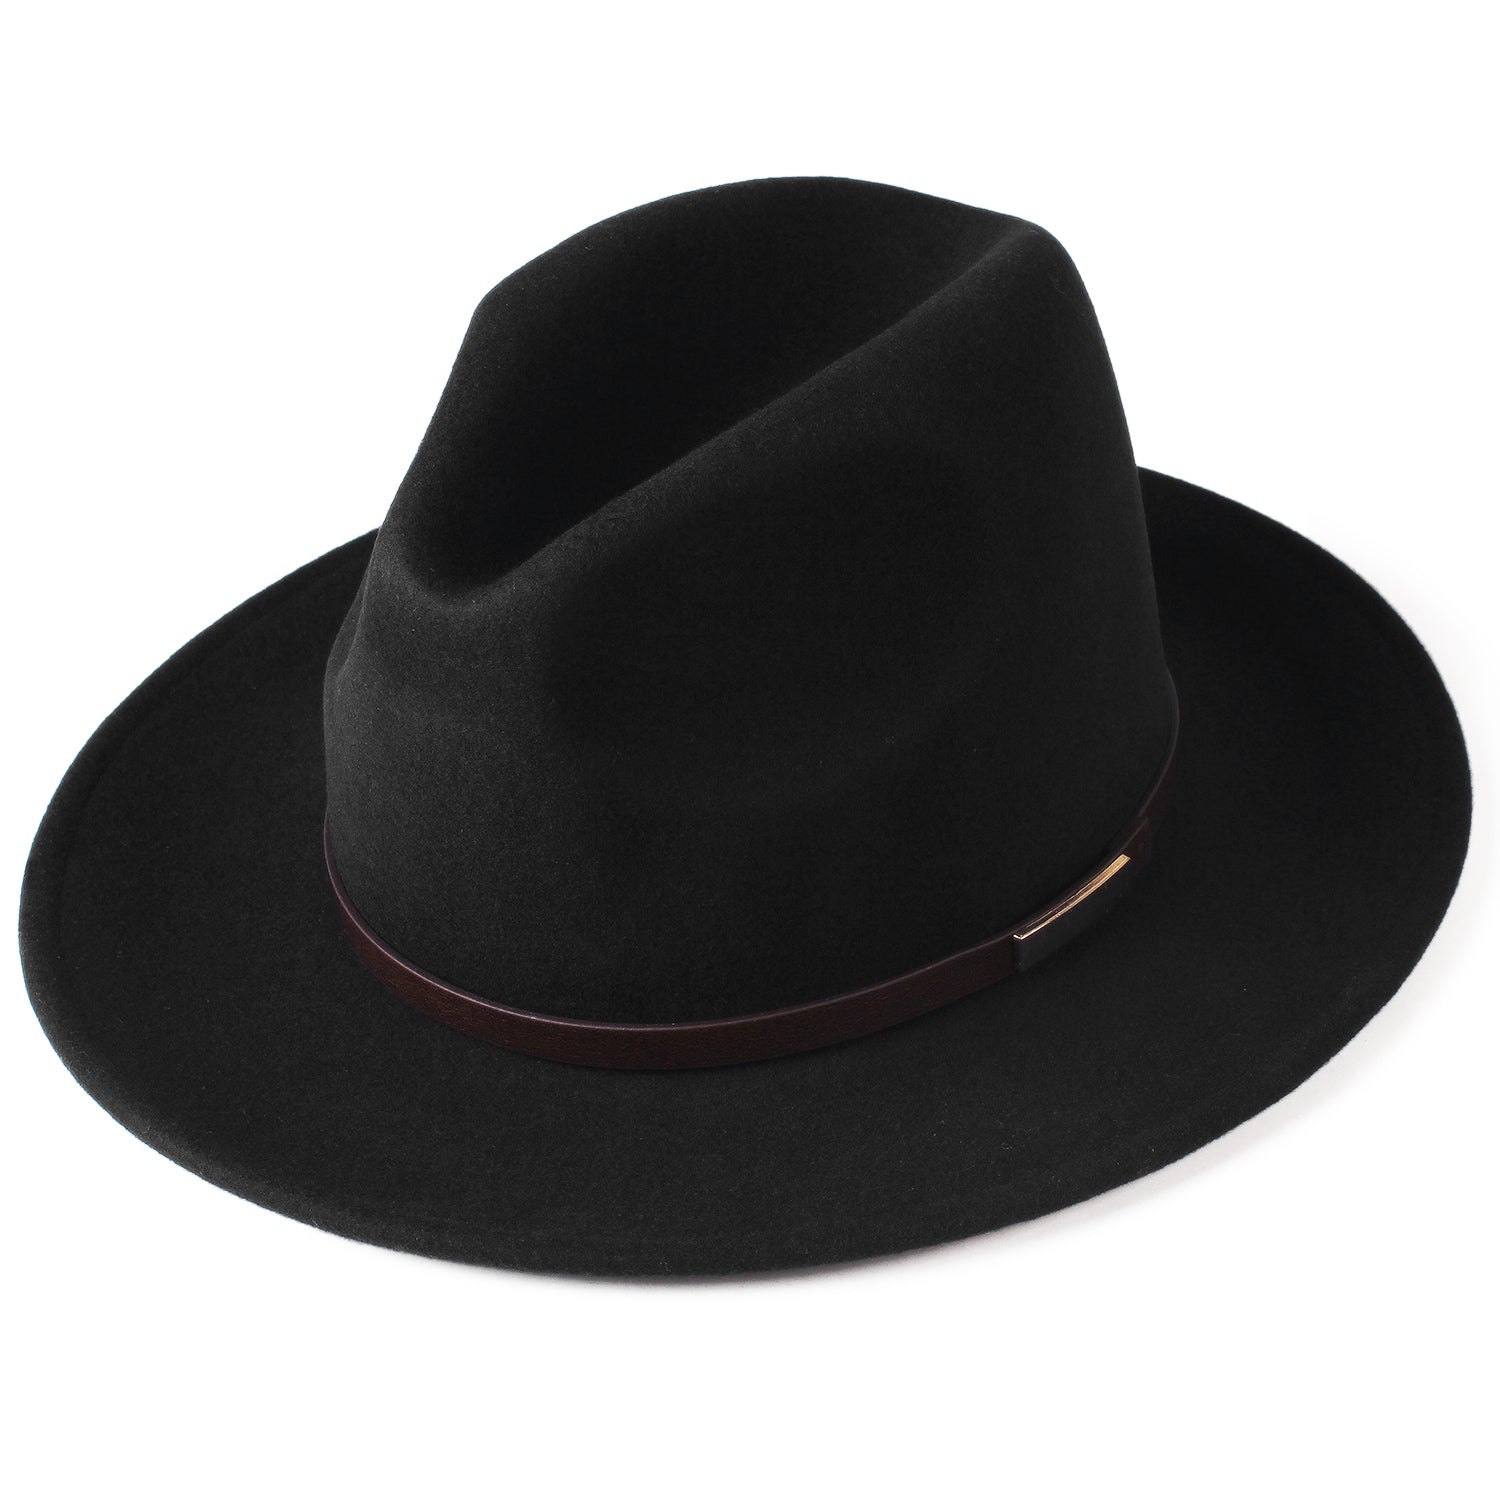 FURTALK Fedora Hats for Men Women 100% Australian Wool Felt Wide Brim